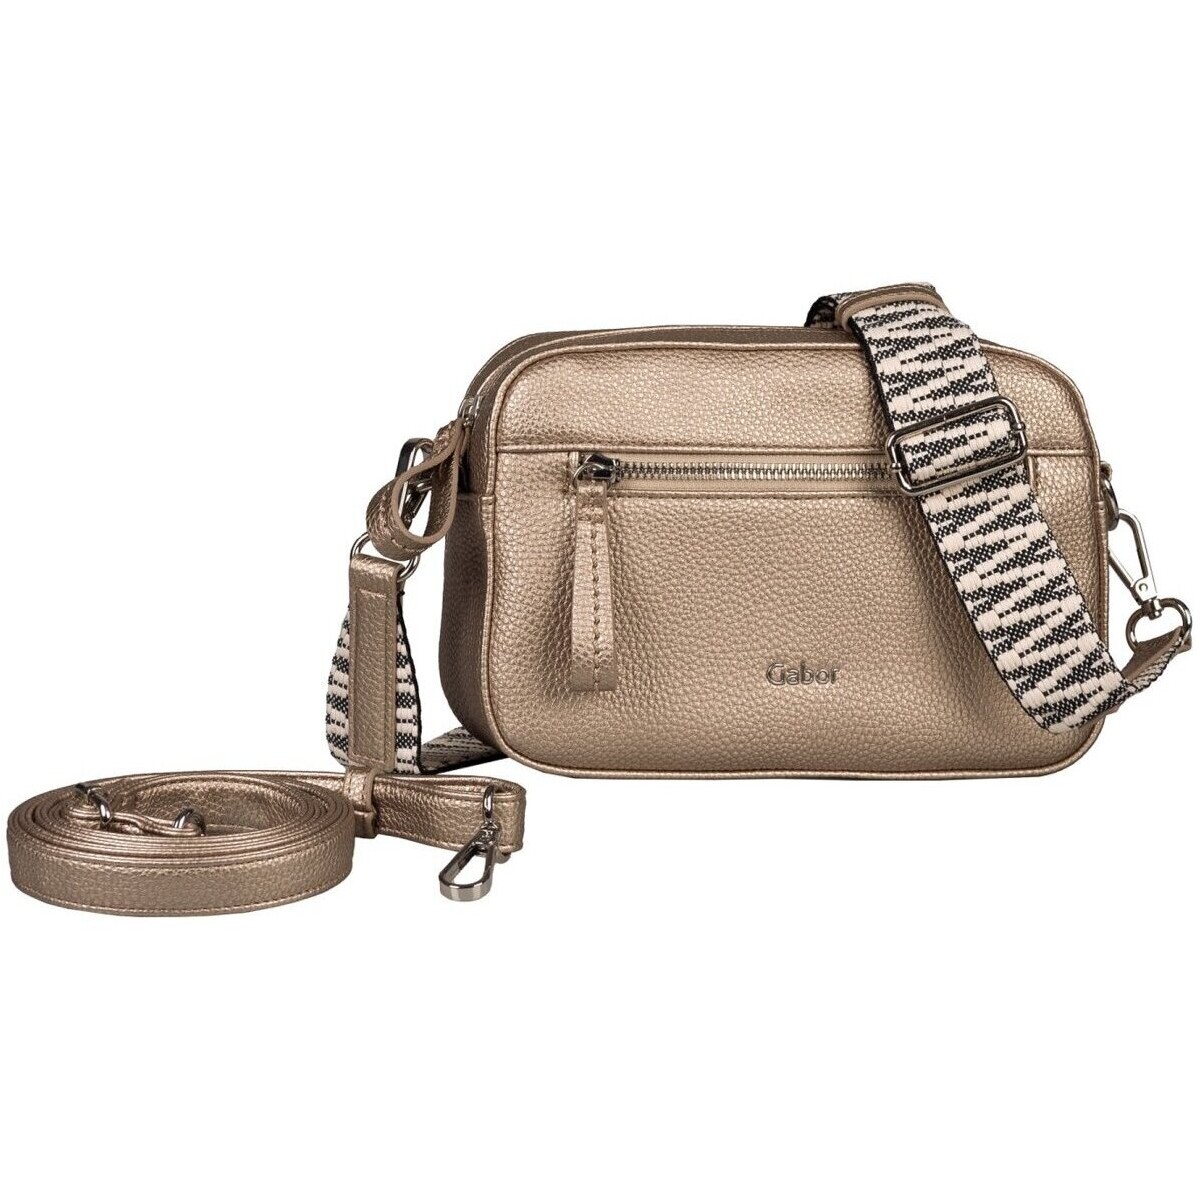 Taschen Damen Handtasche Gabor Mode Accessoires 4210-125 Gold